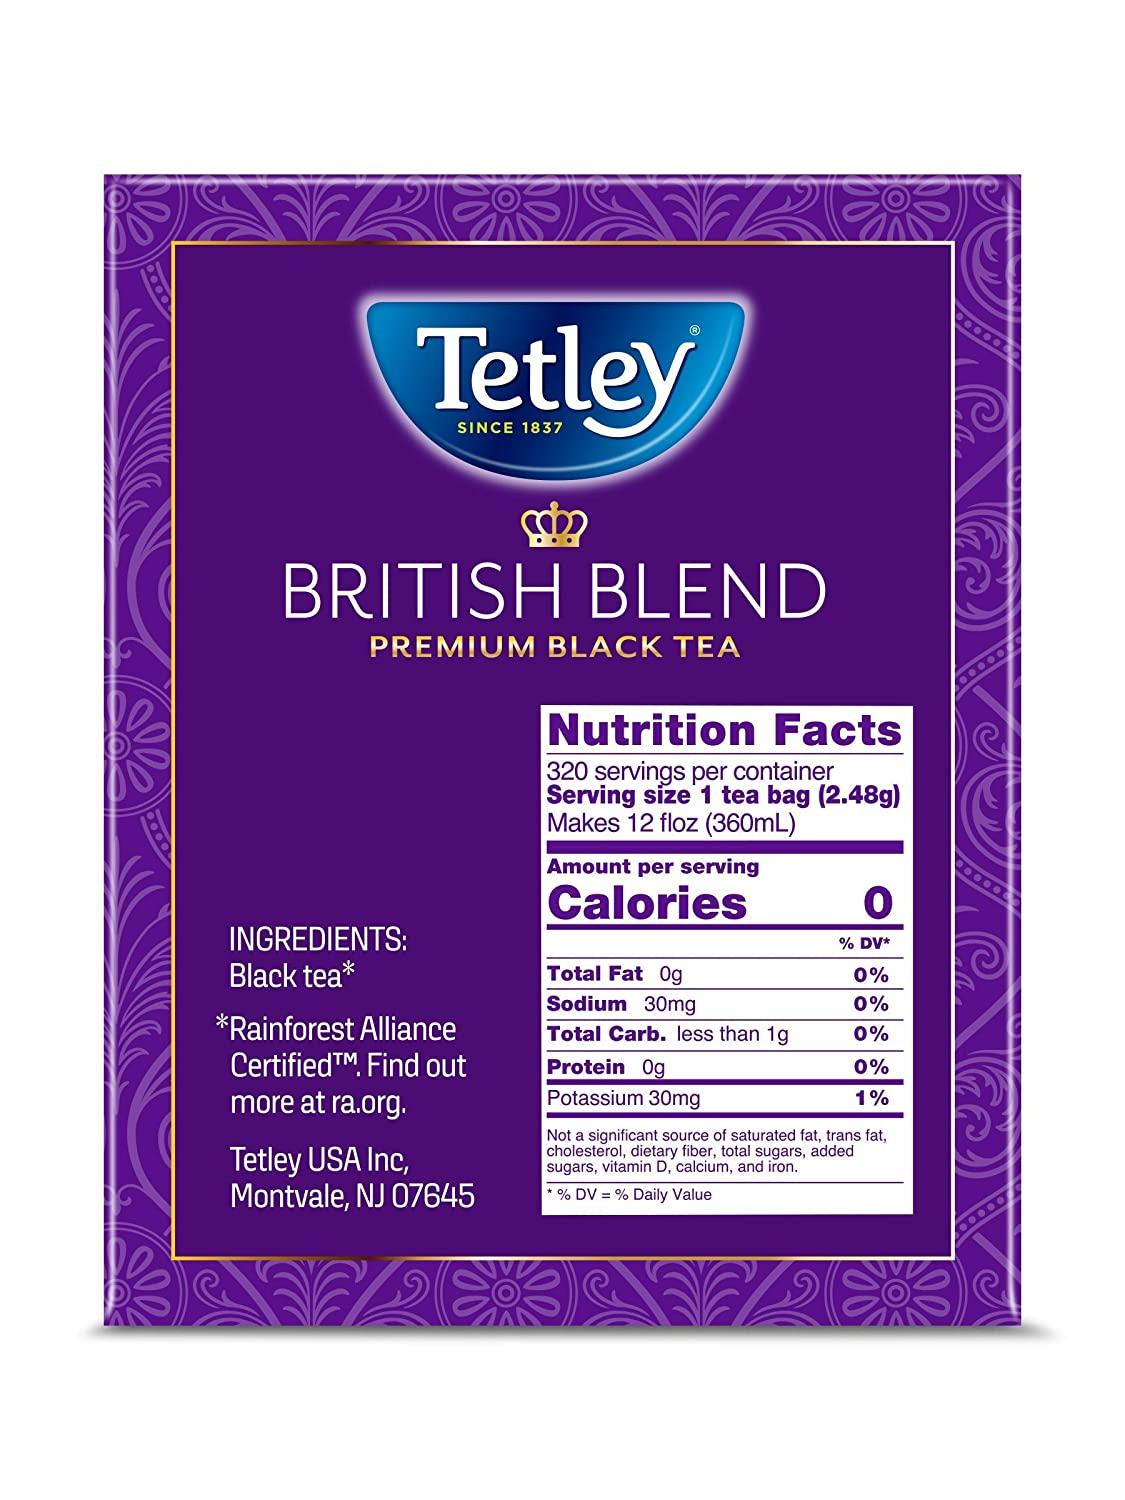 Tetley Classic Blend Rich Black Tea Bags - 100 ct box